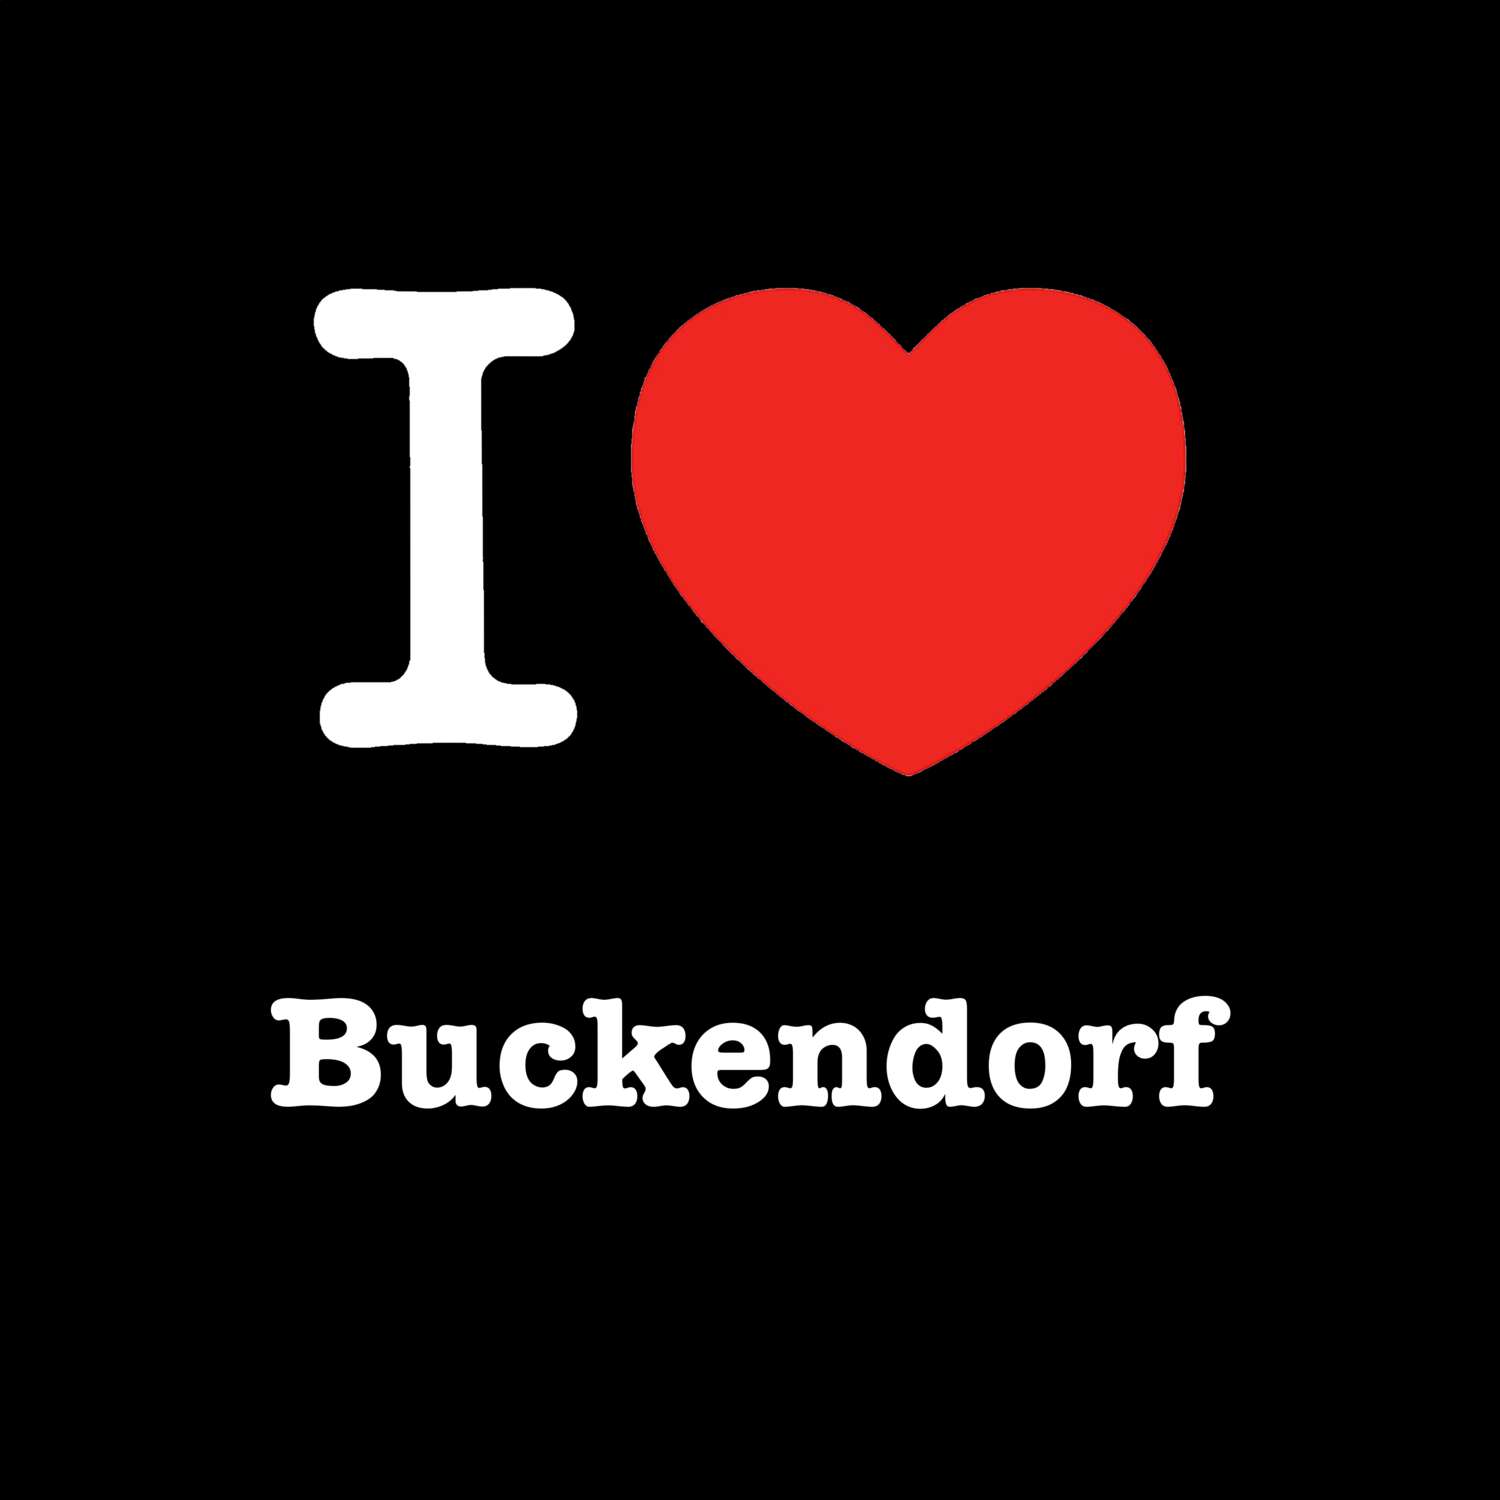 Buckendorf T-Shirt »I love«